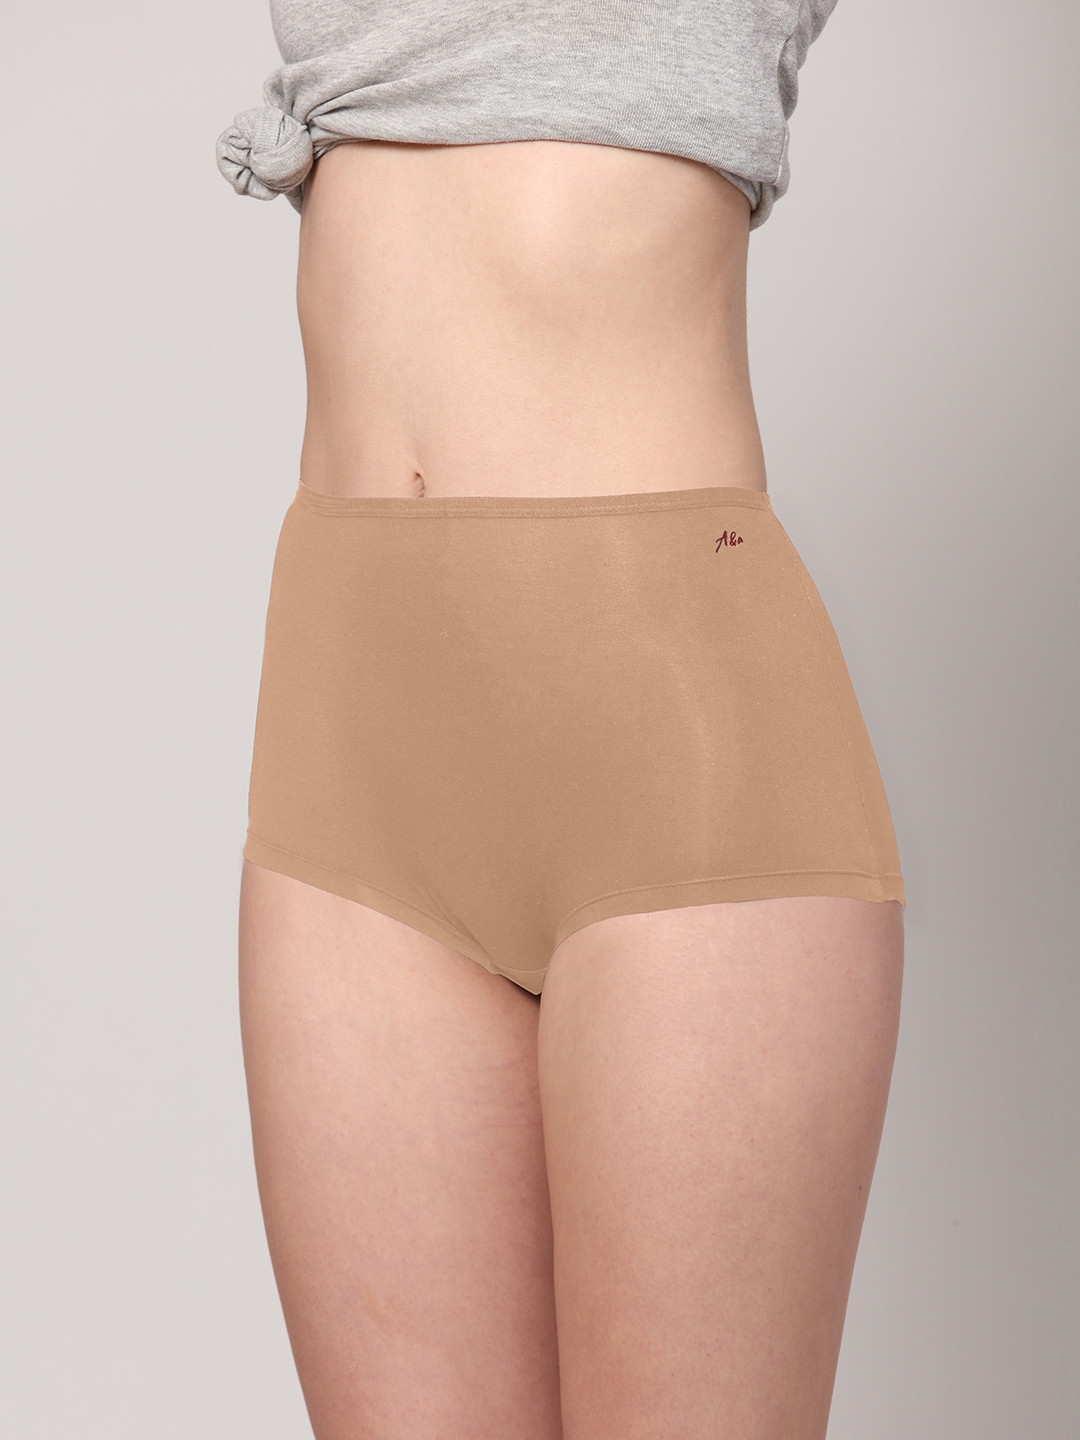 AshleyandAlvis | AshleyandAlvis Women's Panties Micro Modal, Anti Bacterial, Skinny Soft, Premium Boys Leg  -No Itching, Sweat Proof, Double In-seam Gusset 1